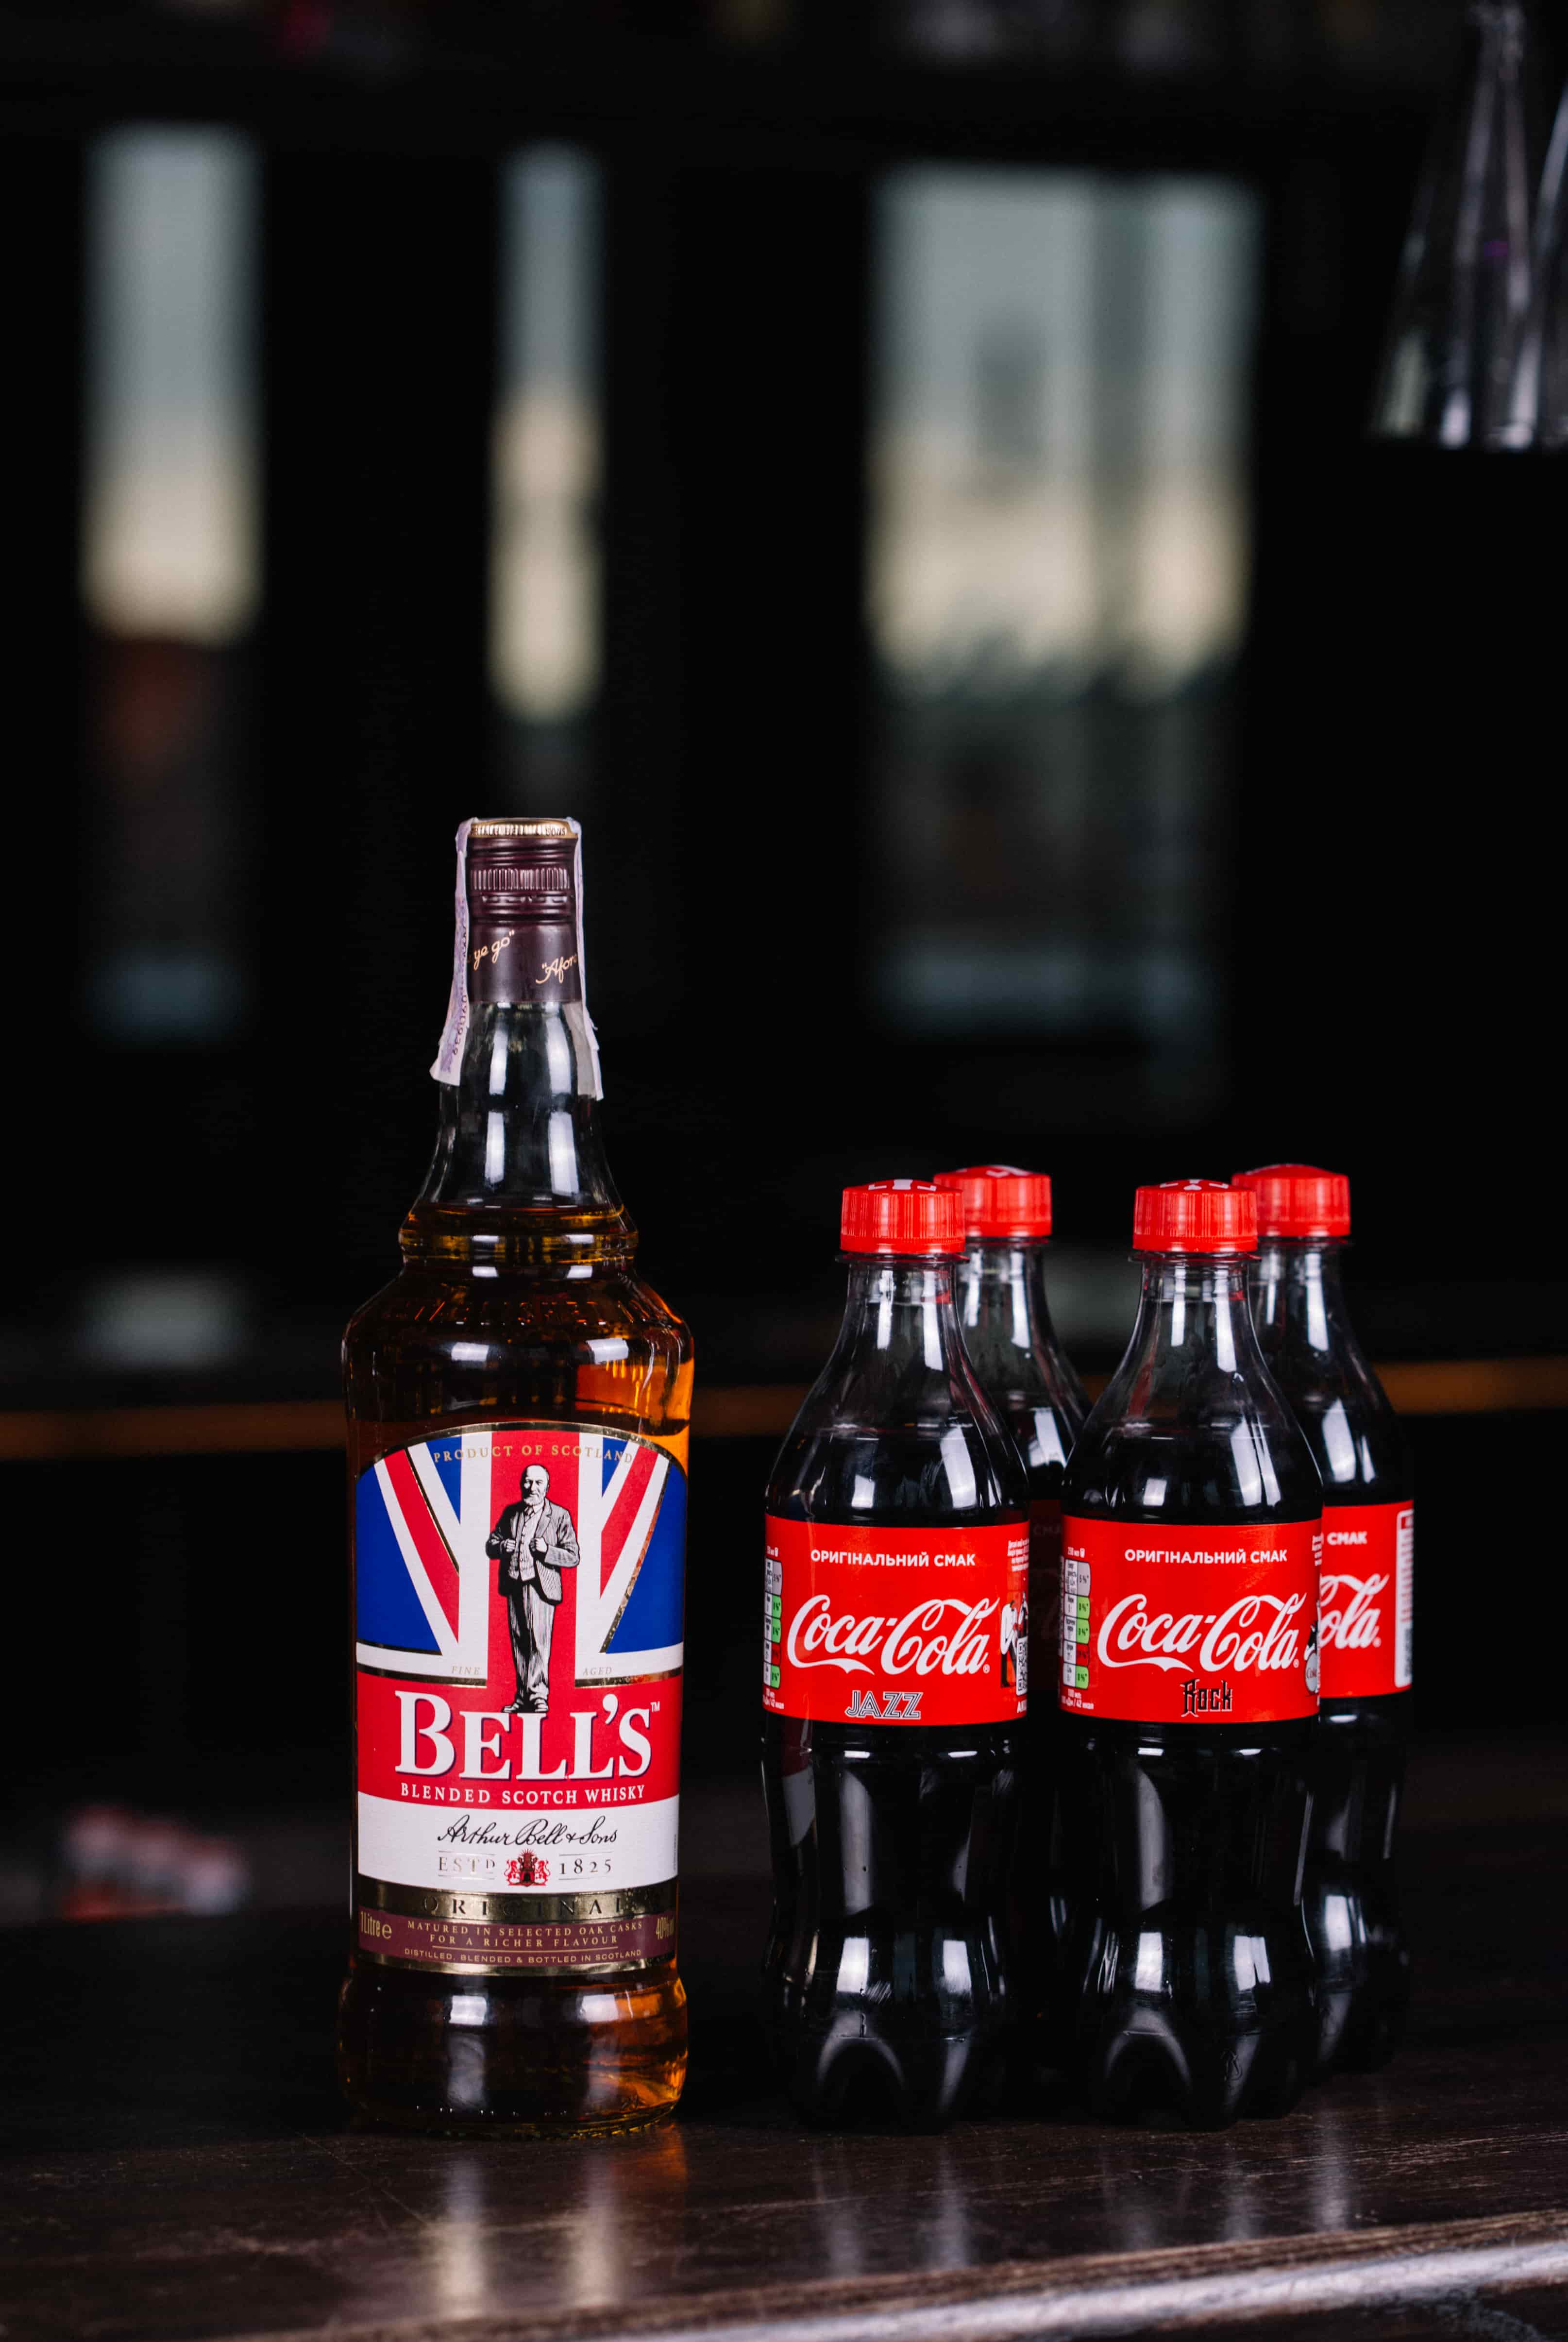 Bell's Original Cola